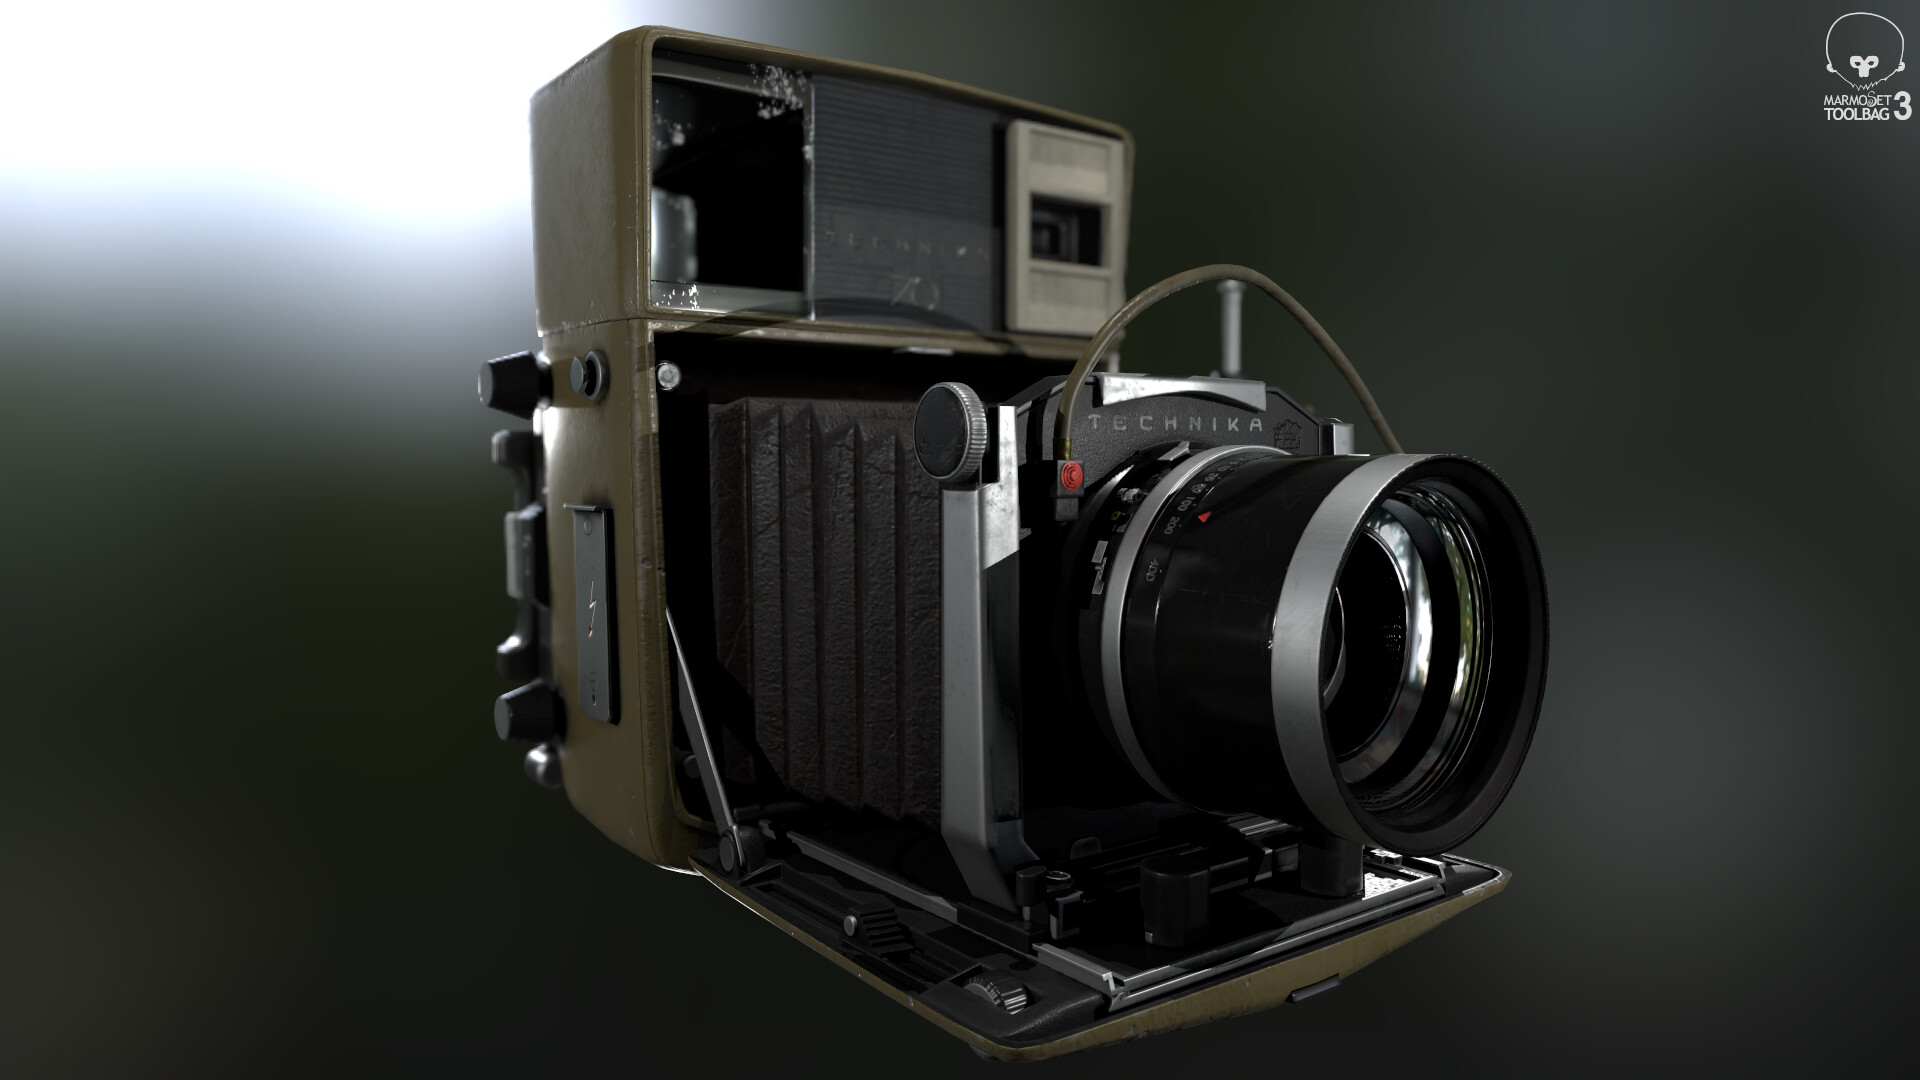 Old photo camera Linhof Technika 70 20k tris 1 - 4k texture Like if you lik...